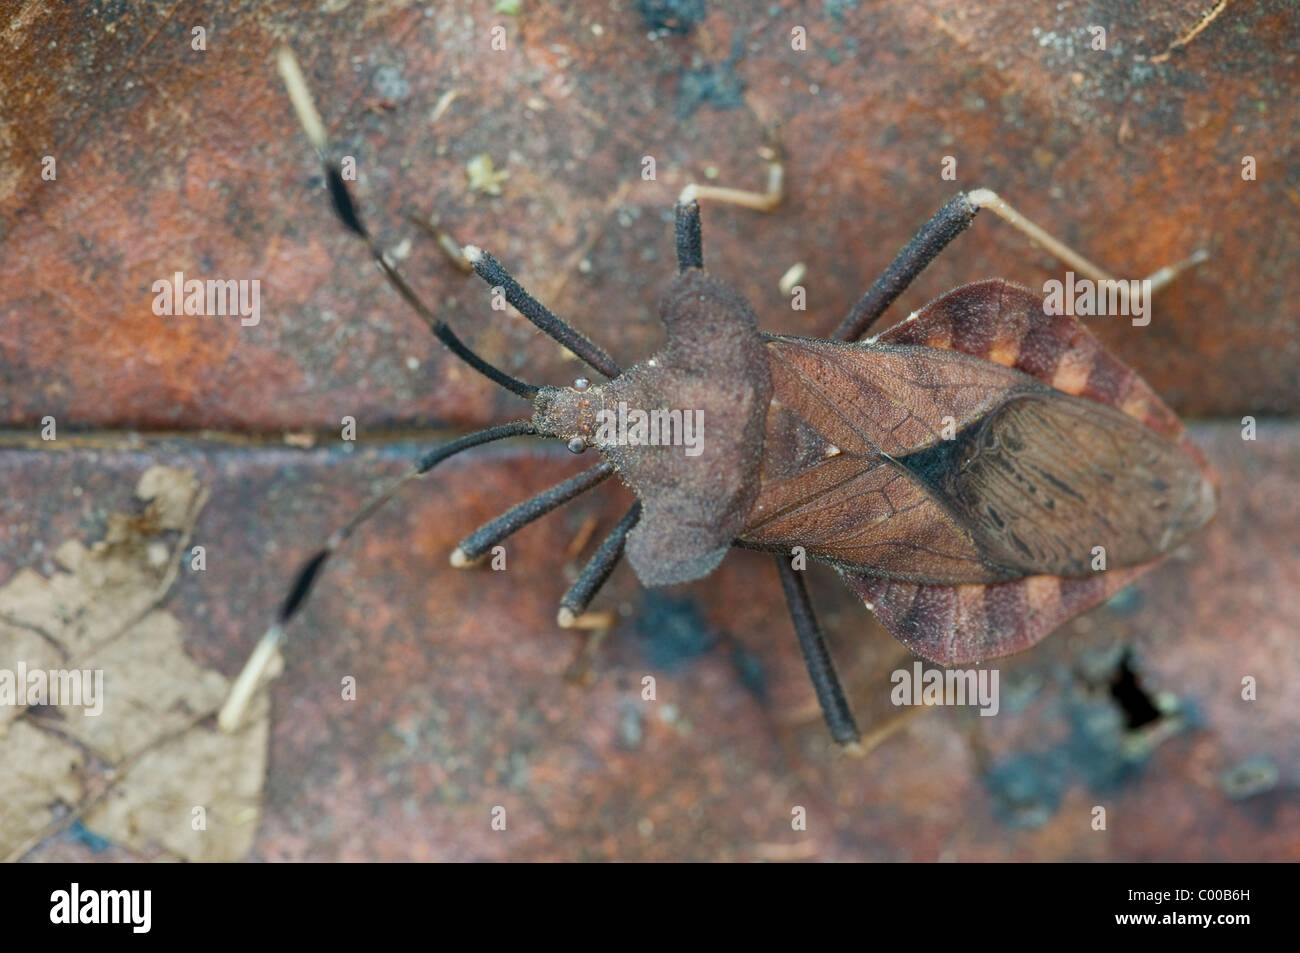 Getarnte Wanze, camouflaged bug, Tanjung Puting Nationalpark, Borneo, Indonesien, Indonesia Stock Photo